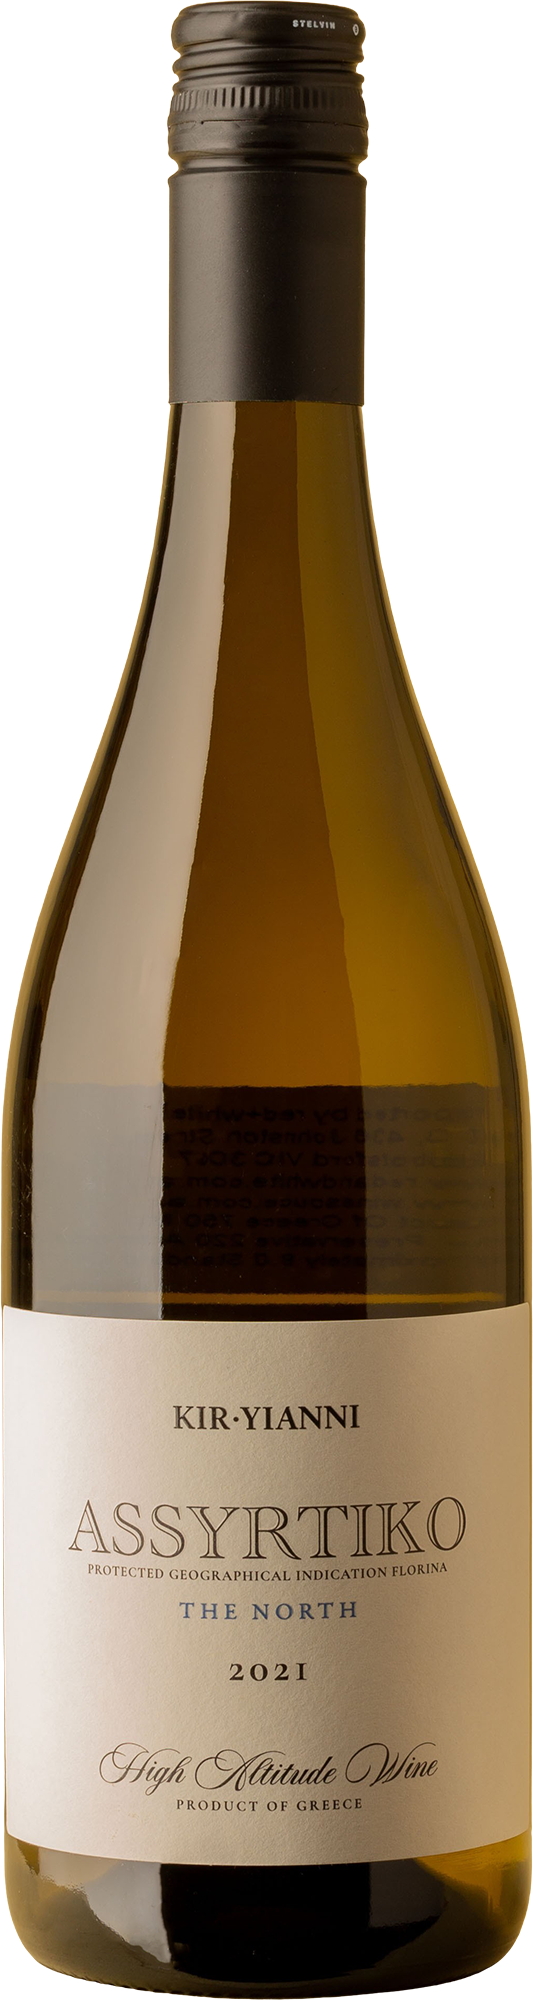 Kir-Yianni - Assyrtiko 2021 White Wine